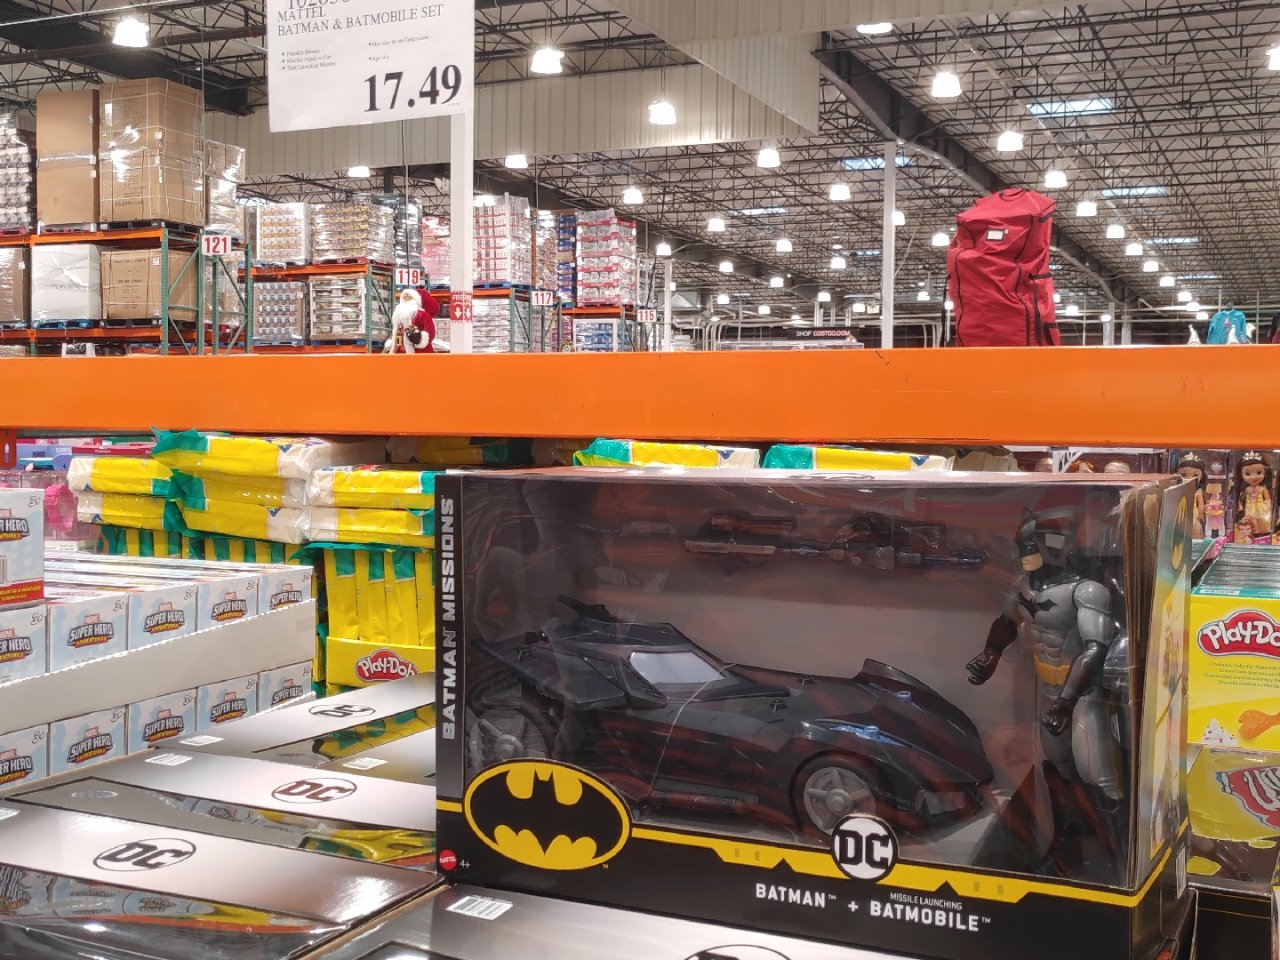 Costco 蝙蝠侠和蝙蝠车玩具...